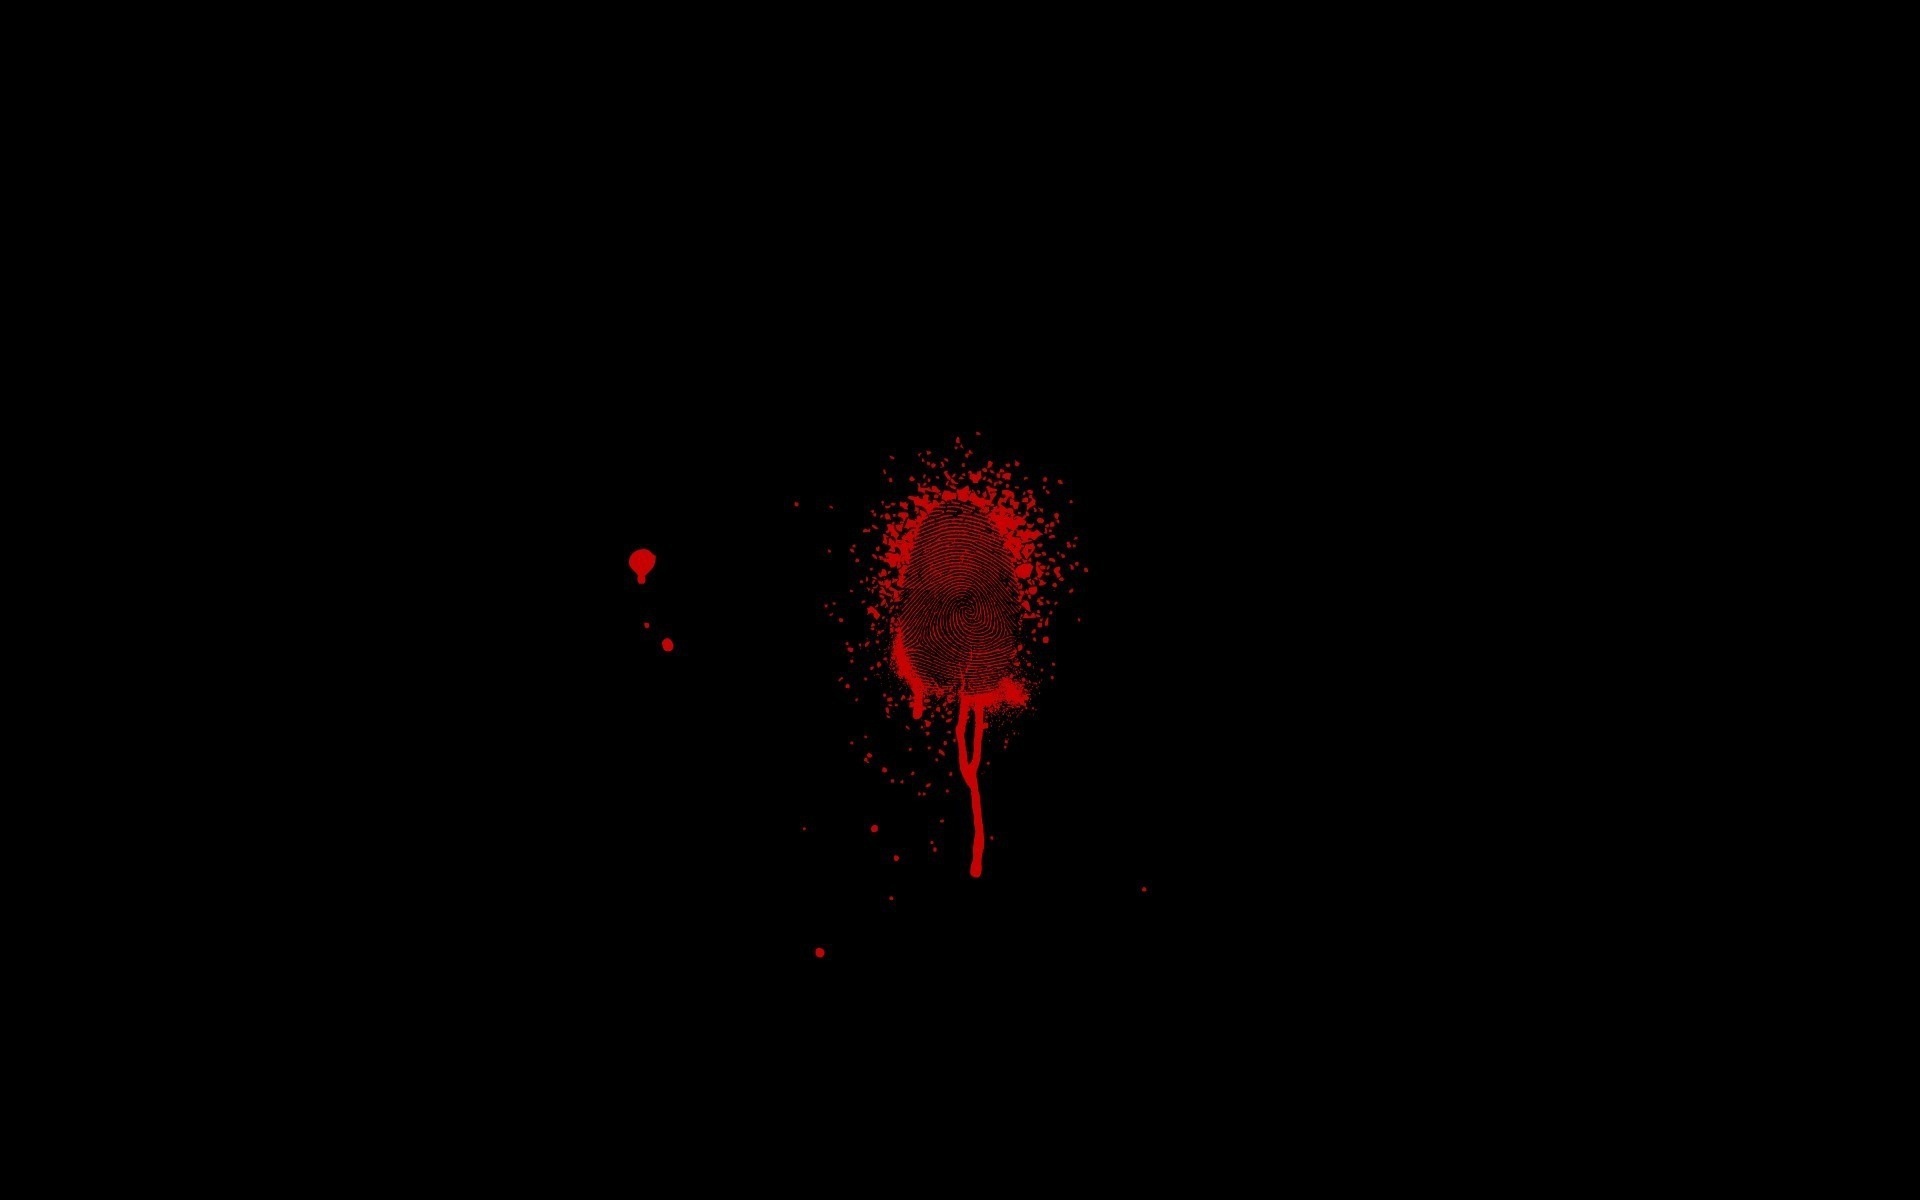 Blood on a black background